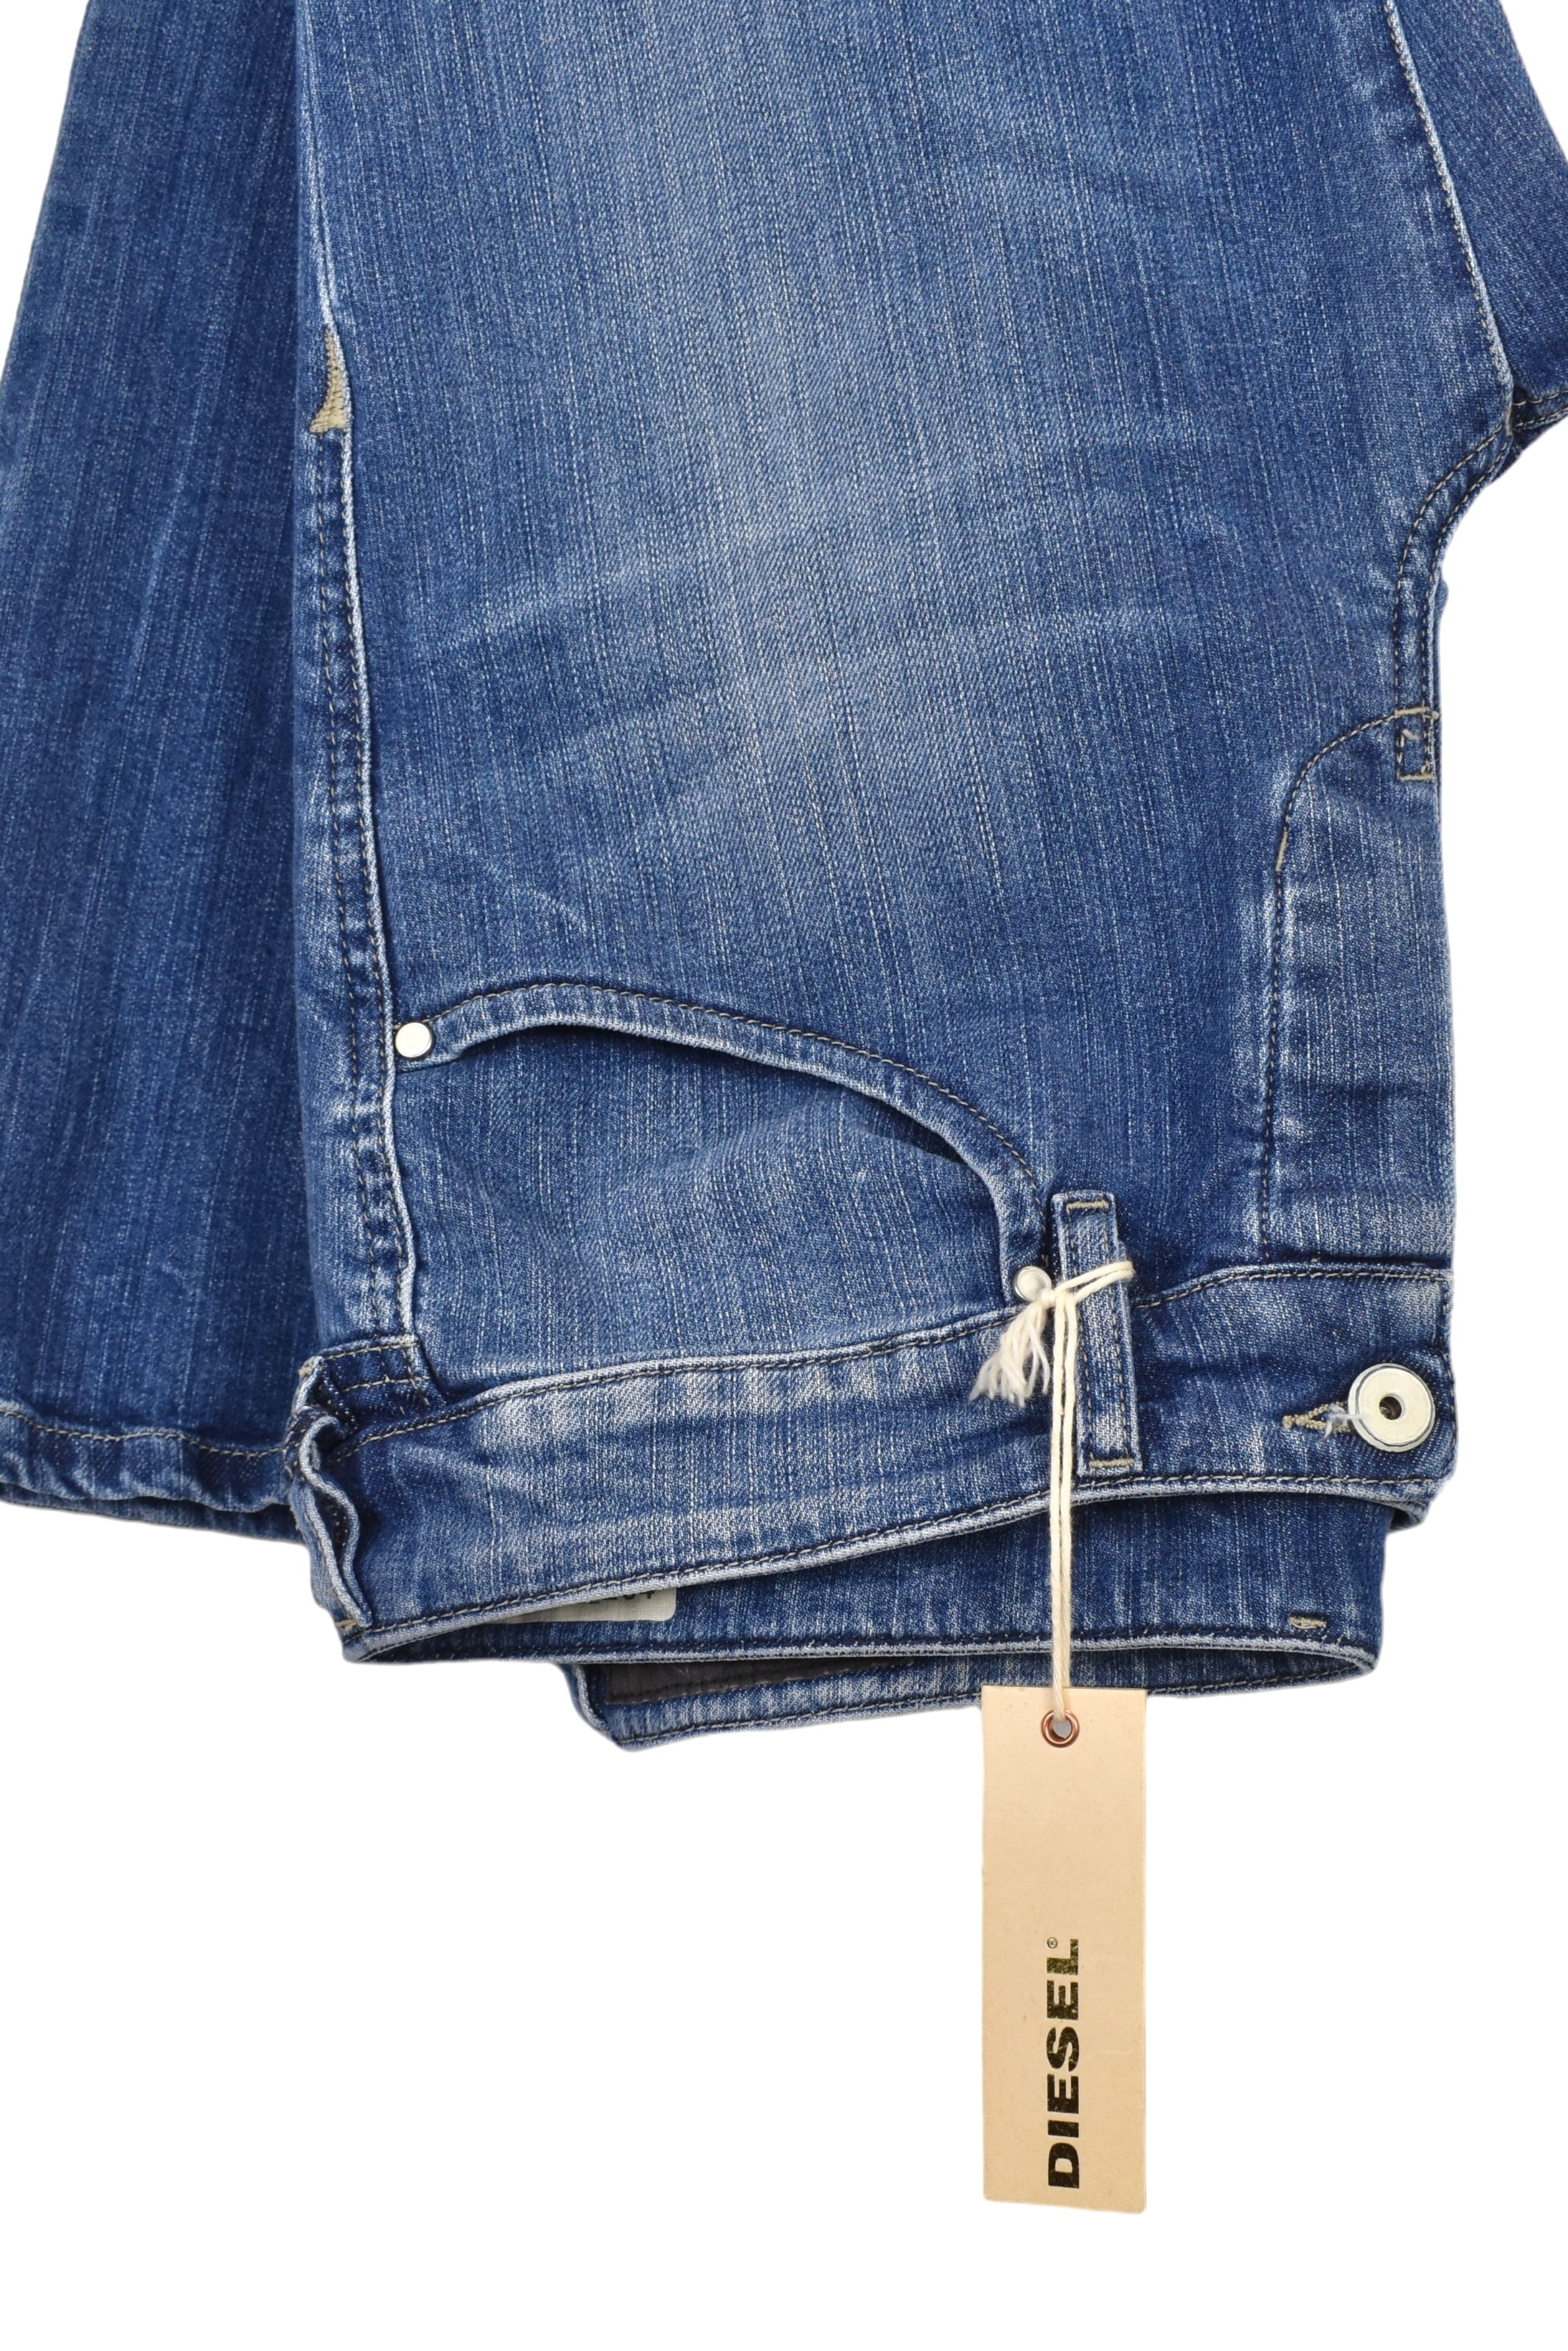 Women's vintage Diesel jeans (W31), blue denim NWT